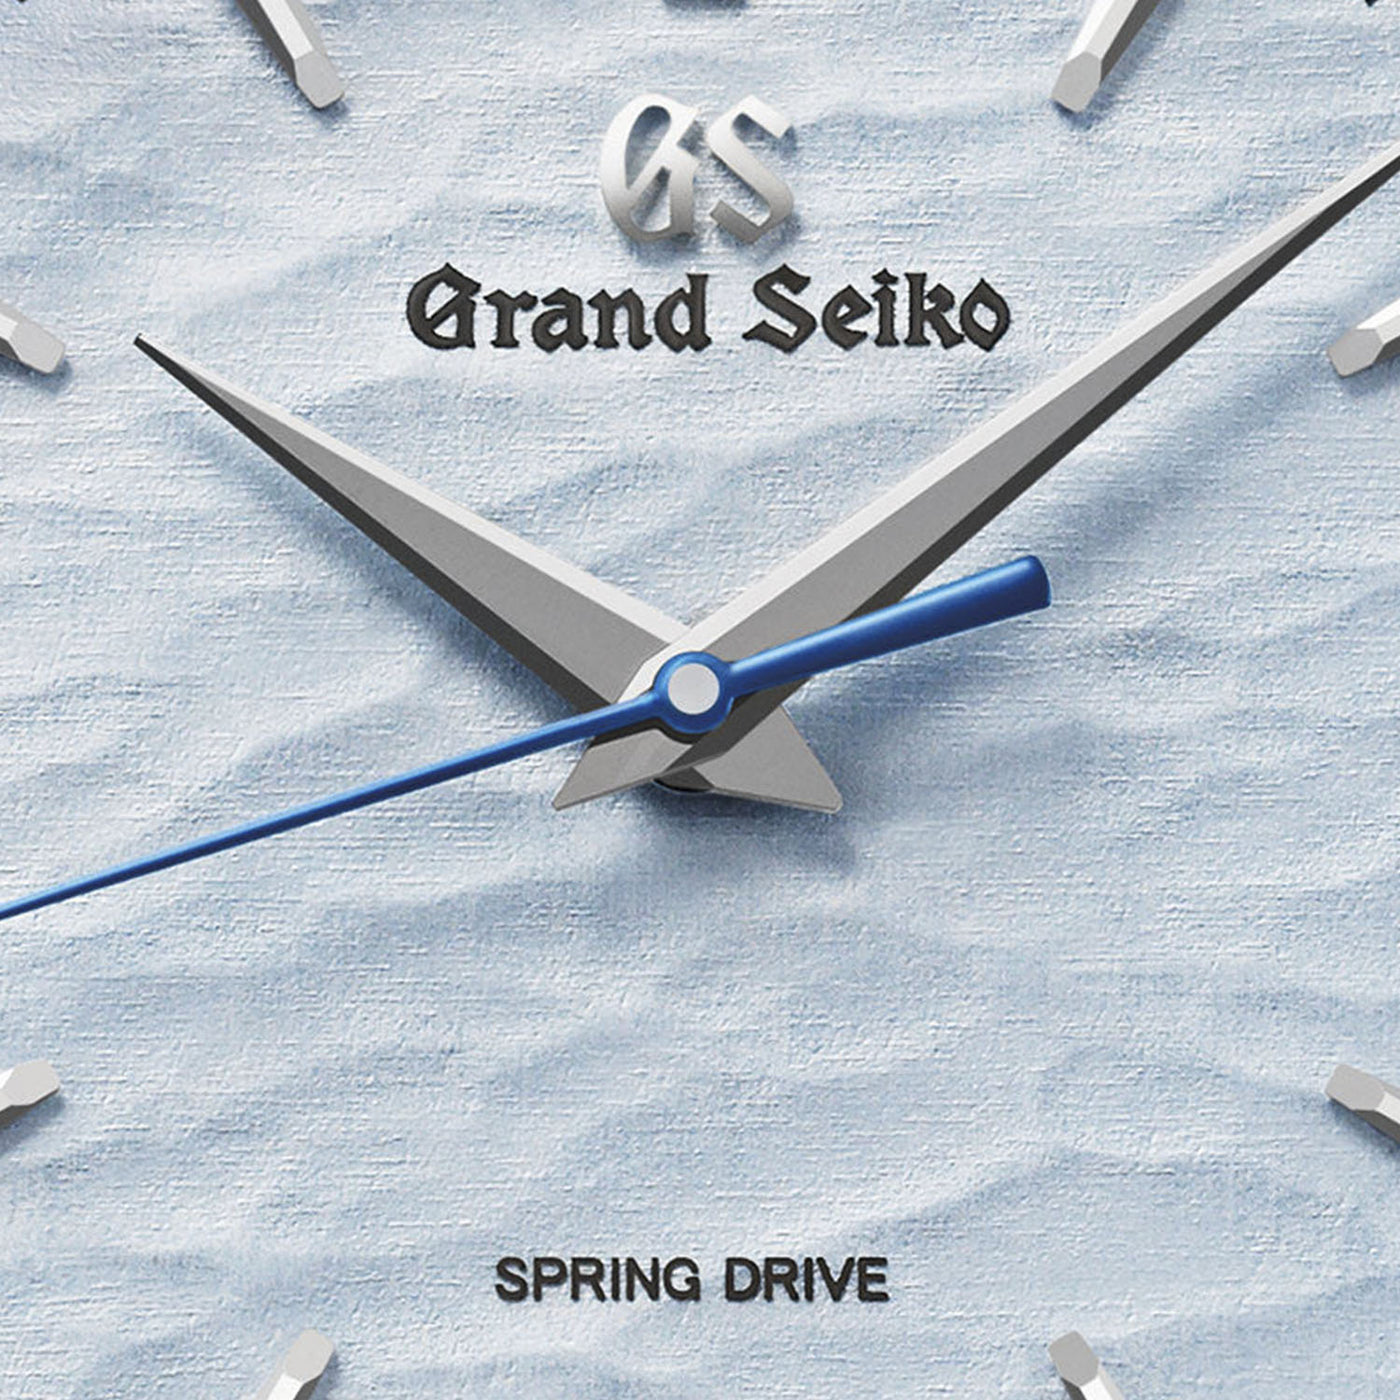 Grand Seiko Elegance Omiwatari Spring Drive Stem Winding – SBGY007